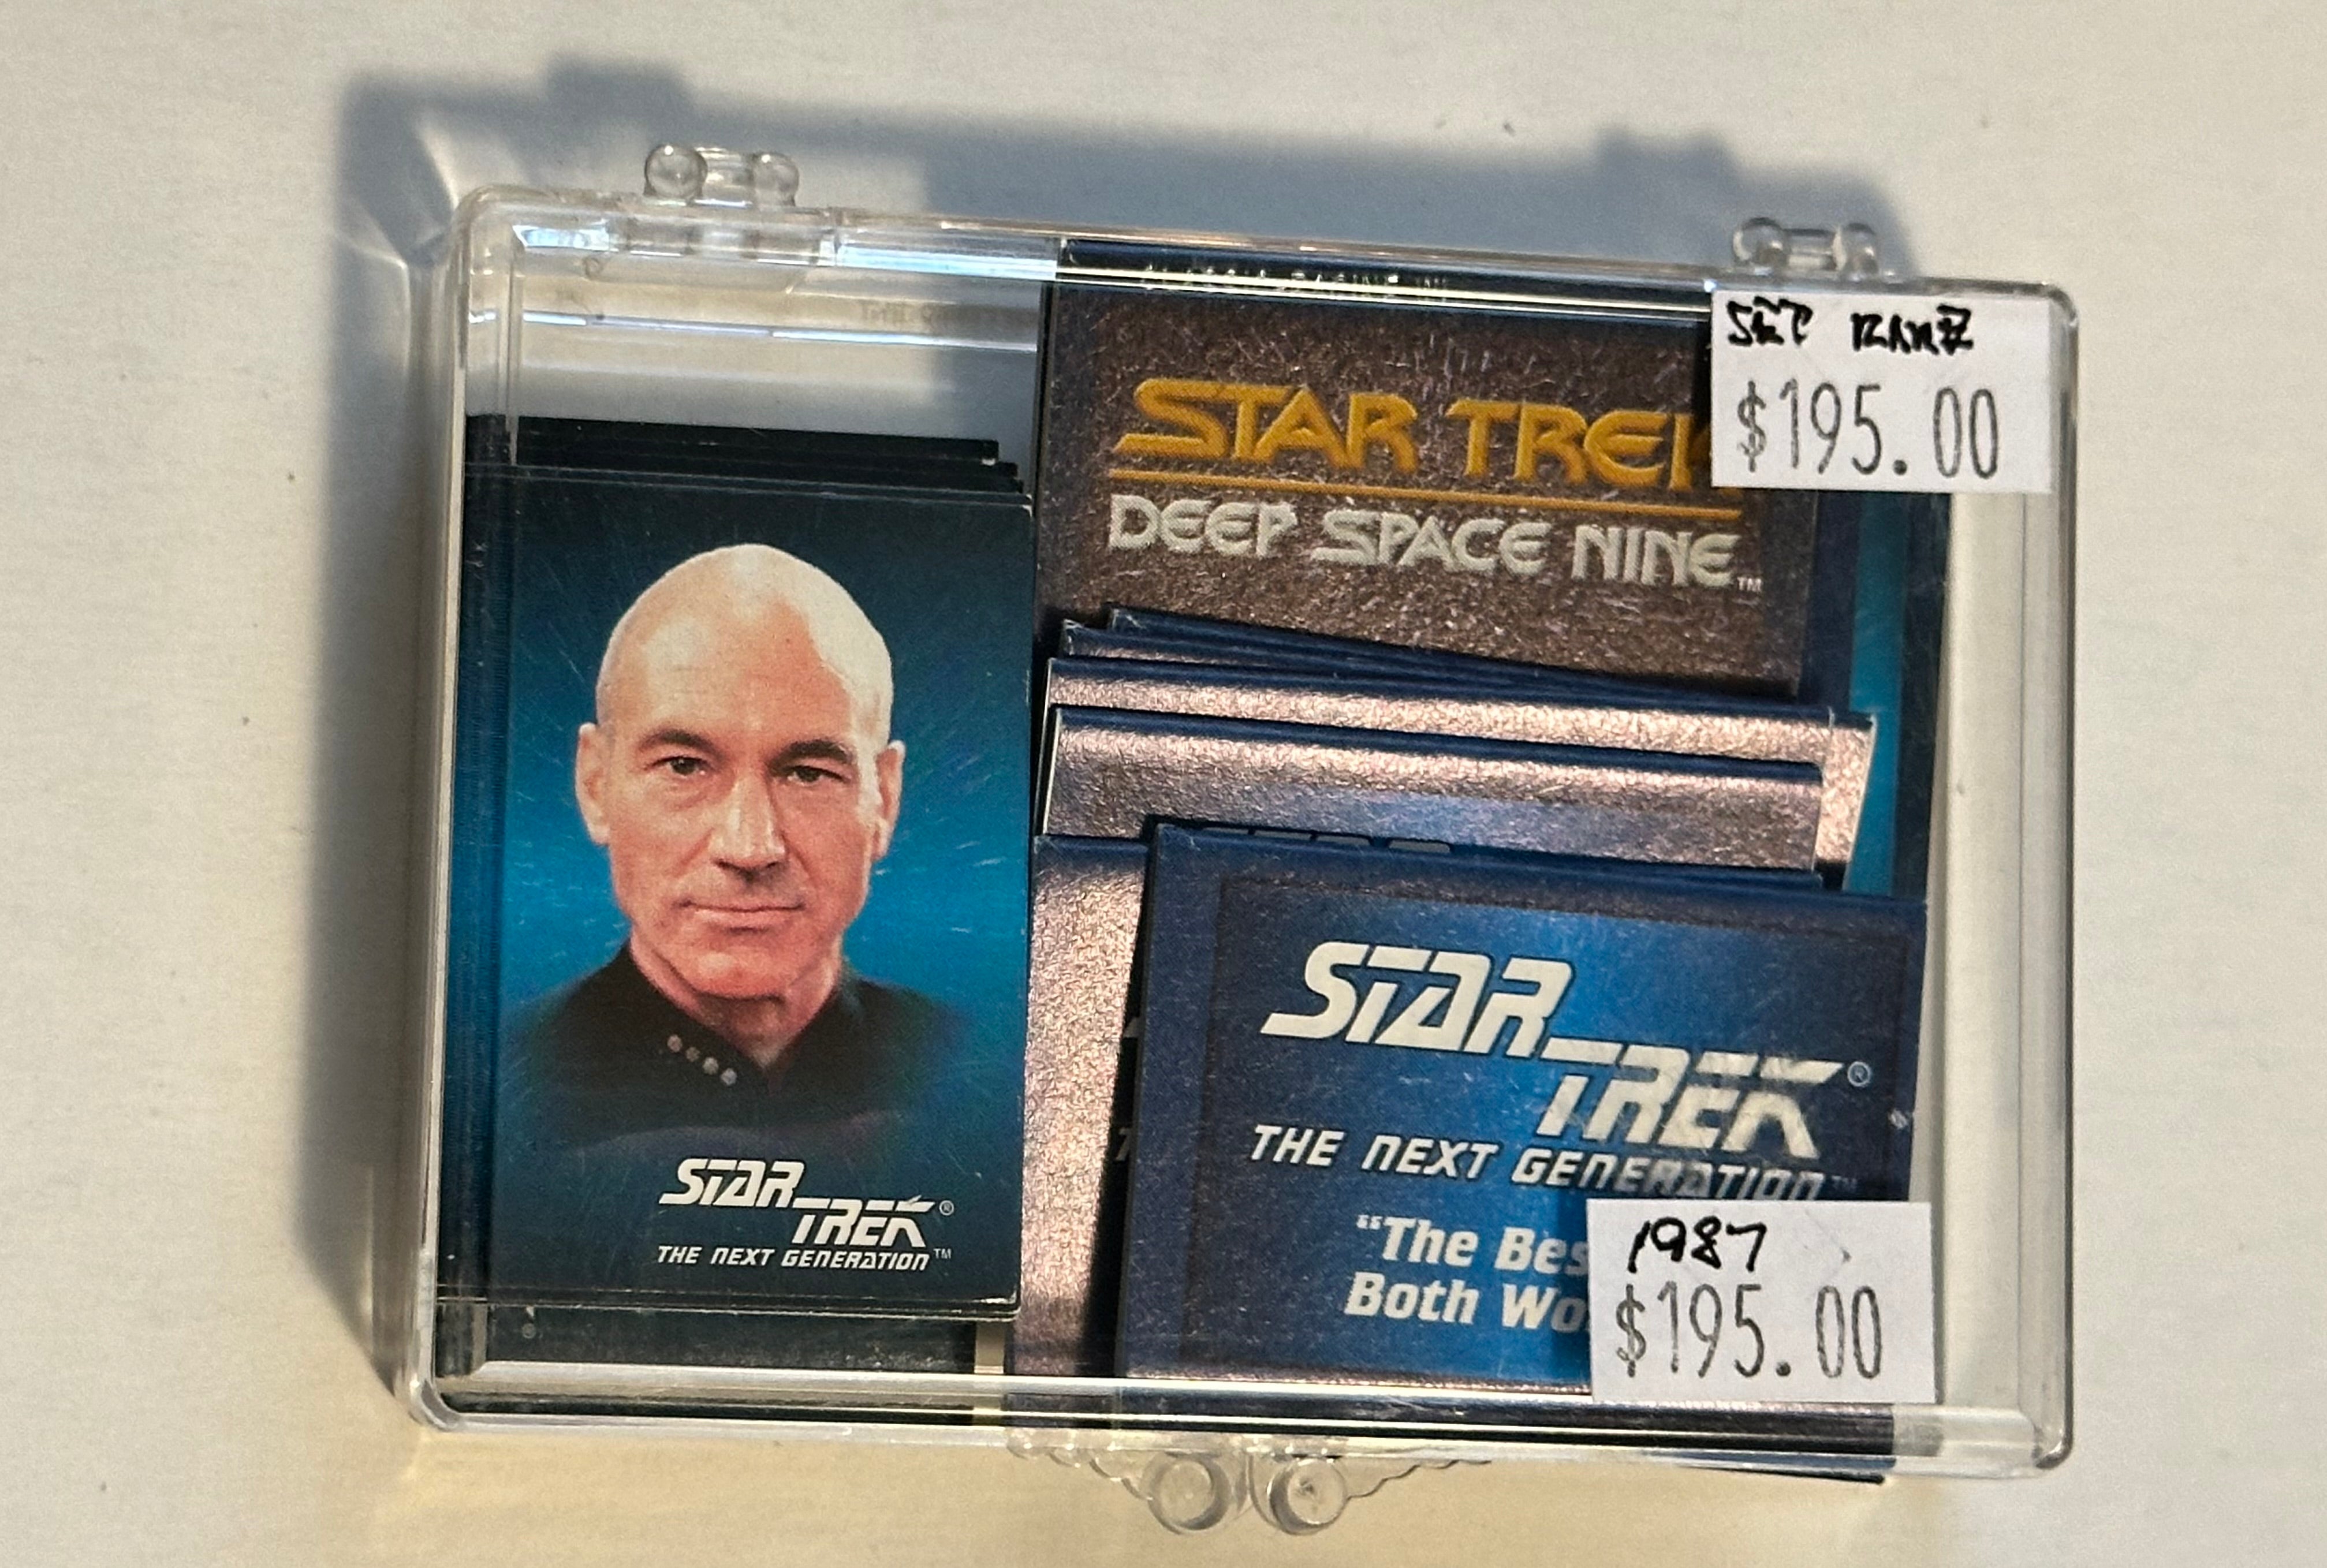 Star Trek Hostess chips Next Generation and DS9 rare cards and foldees rare set 1987